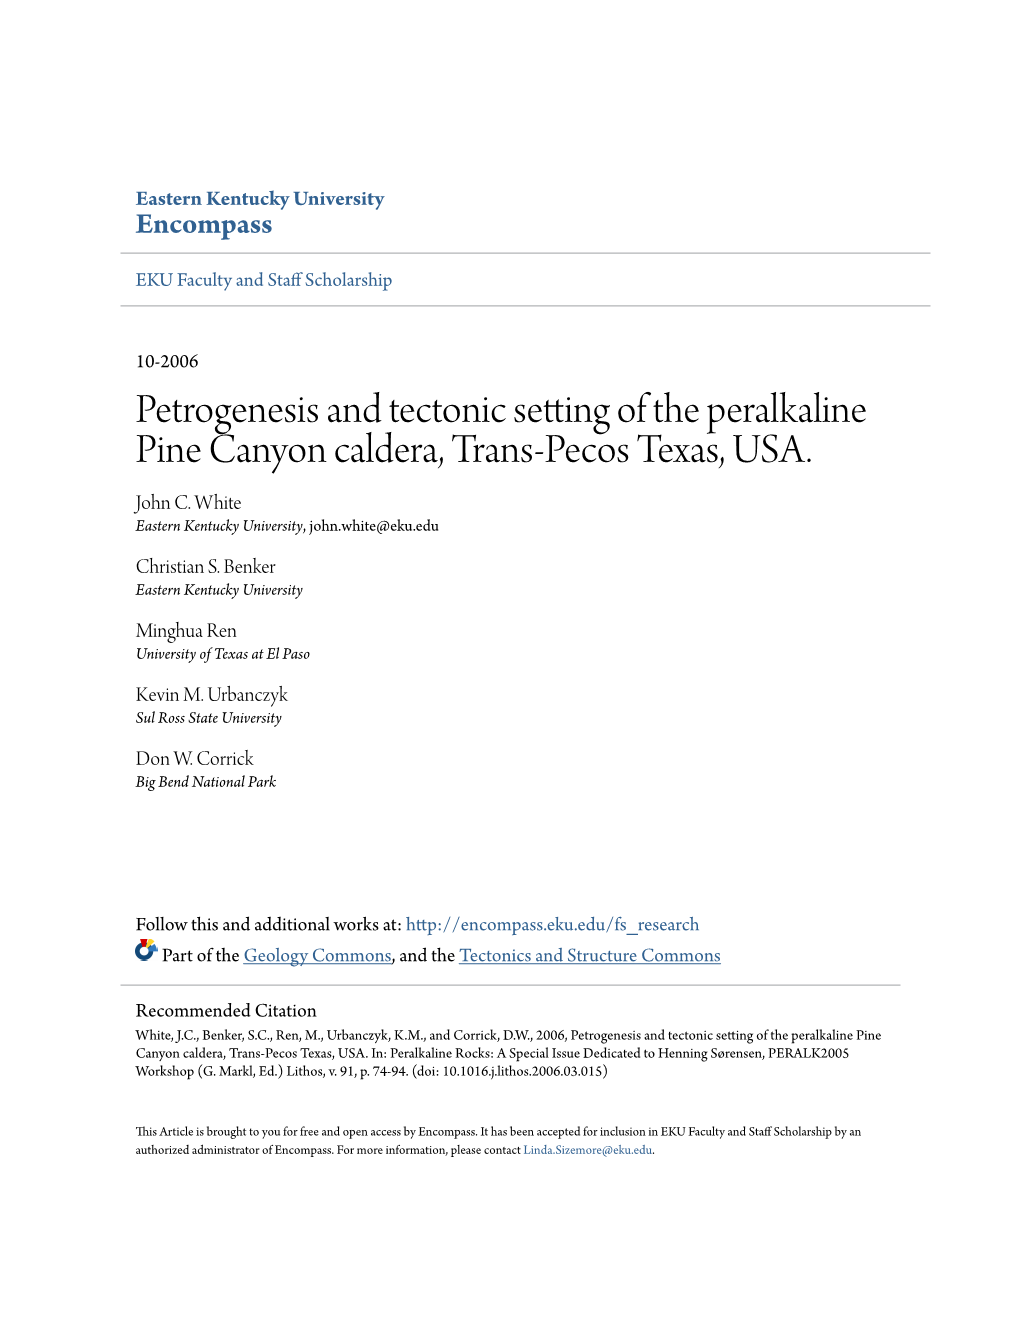 Petrogenesis and Tectonic Setting of the Peralkaline Pine Canyon Caldera, Trans-Pecos Texas, USA